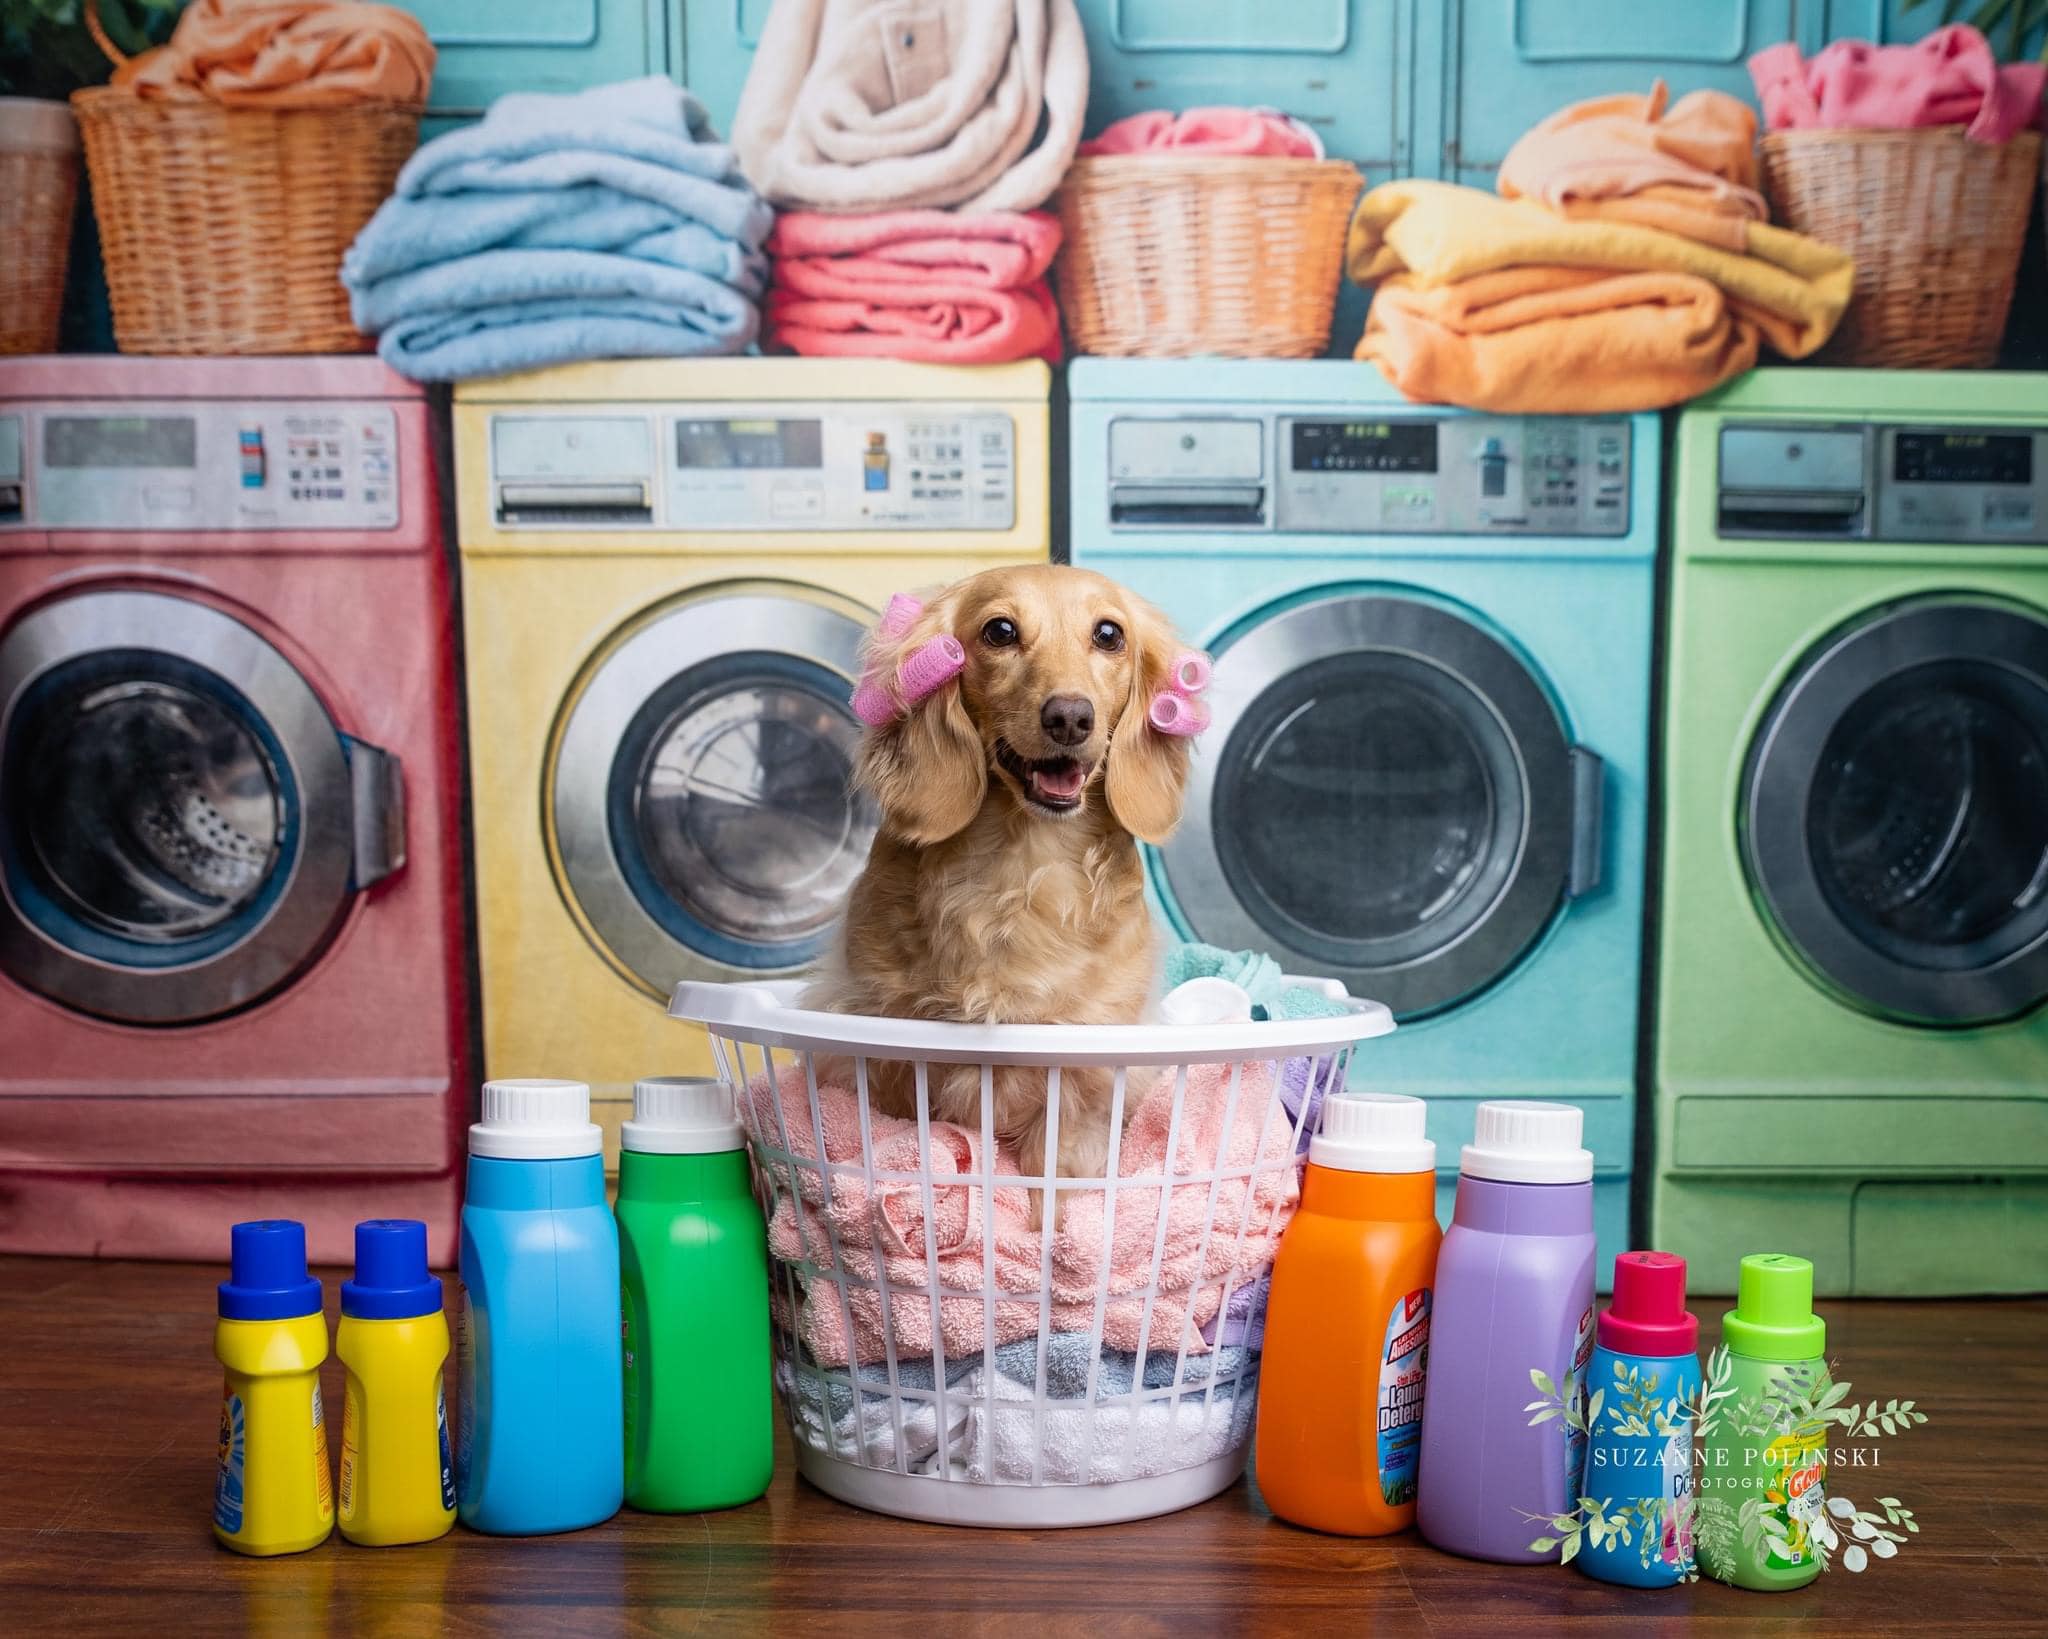 Dog sitting in basket in front of washing machine backdrop